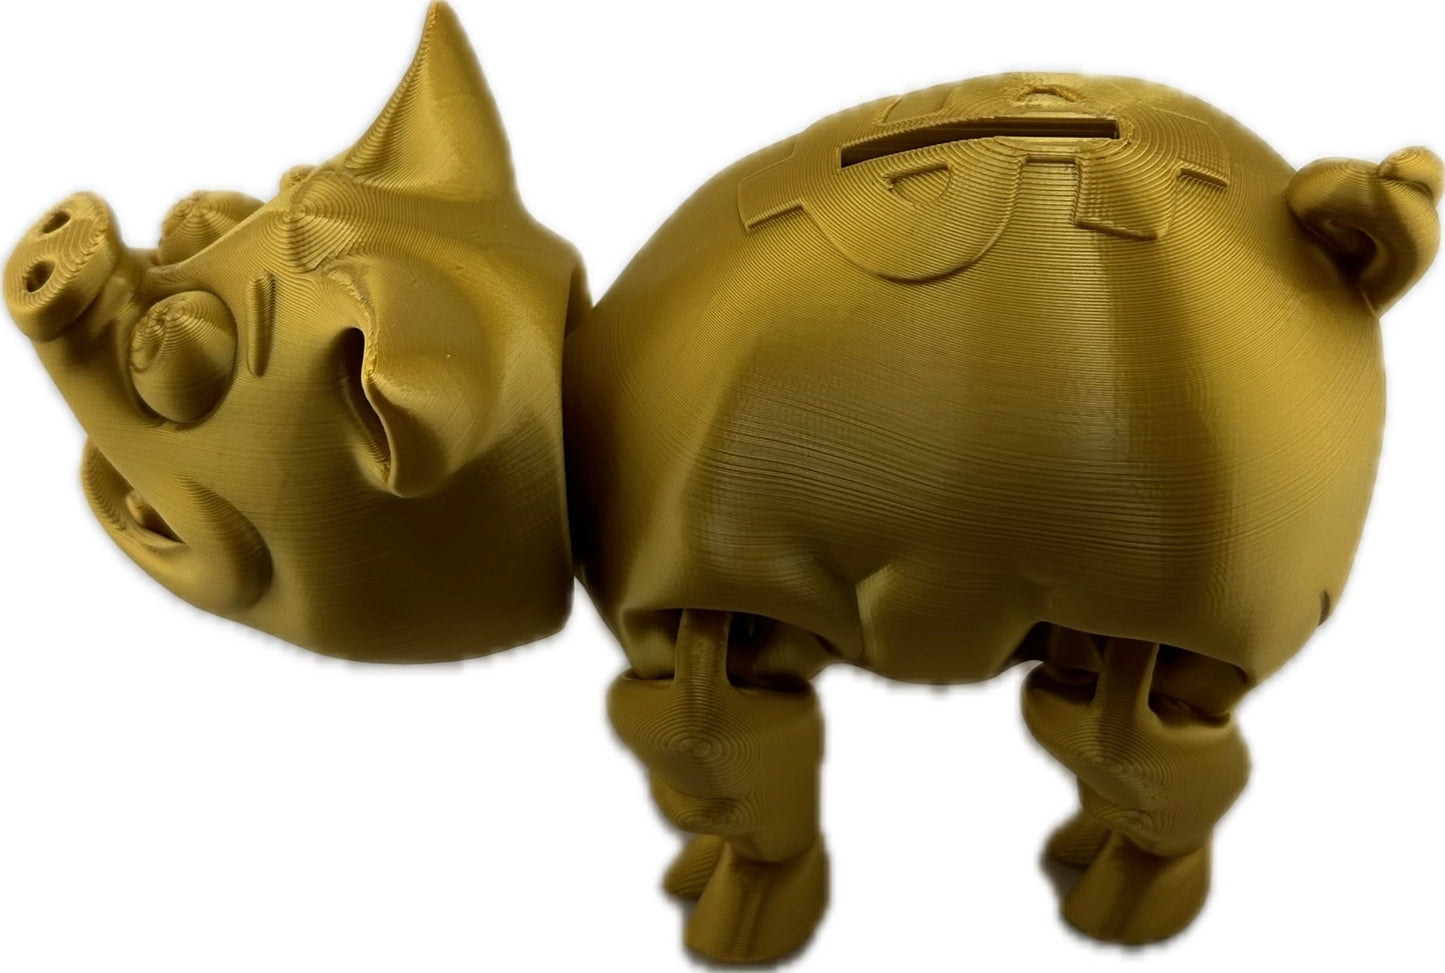 Piggy Bank - Articulated Piggy Bank - 3D Piggy Bank - Acworth Alchemist